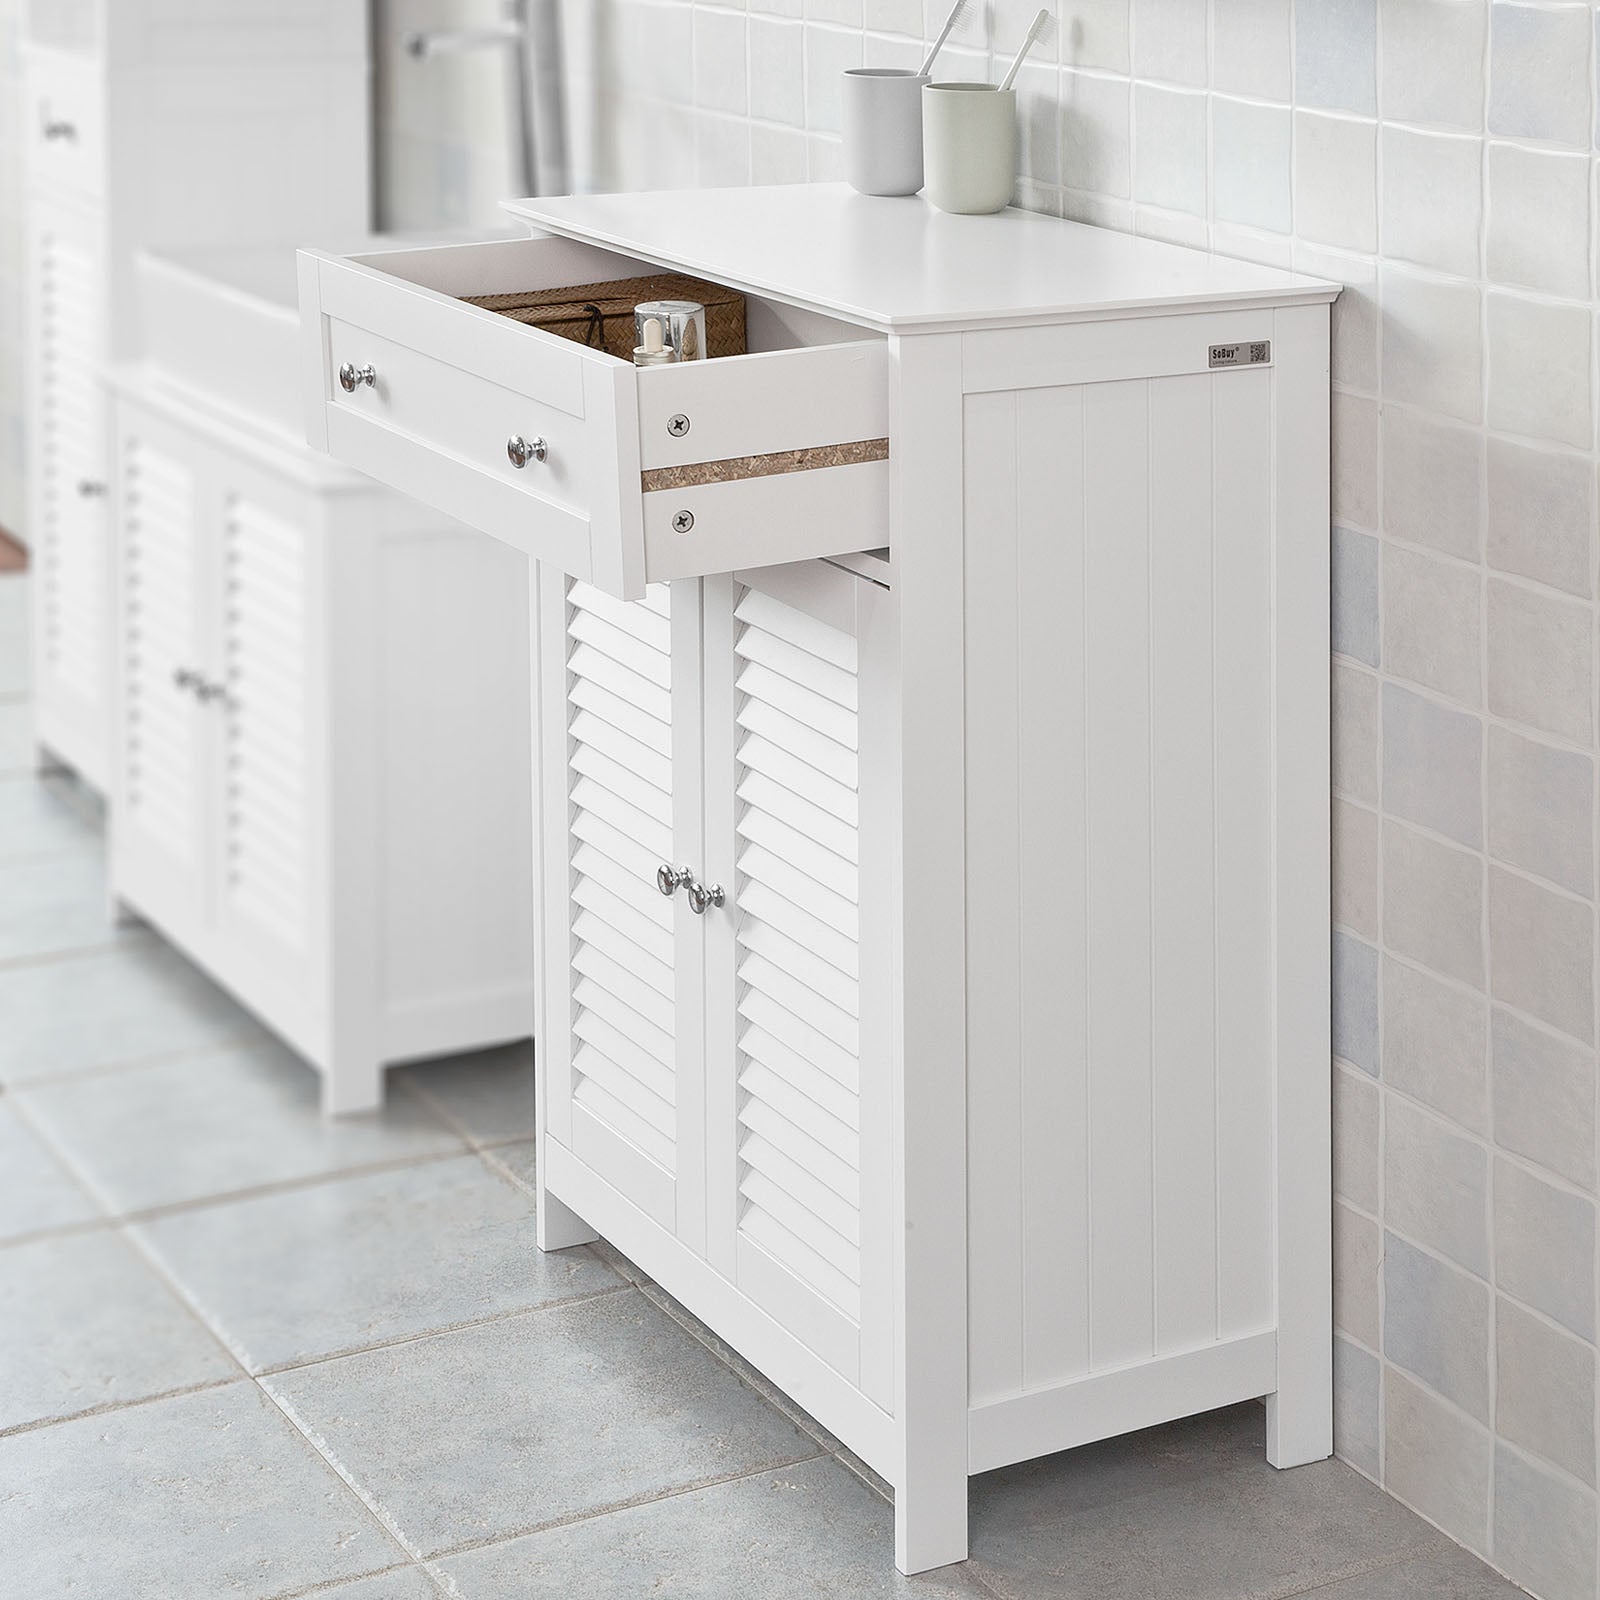 SoBuy FRG238-W, White Free Standing Double Shutter Door Bathroom Storage Cabinet Cupboard